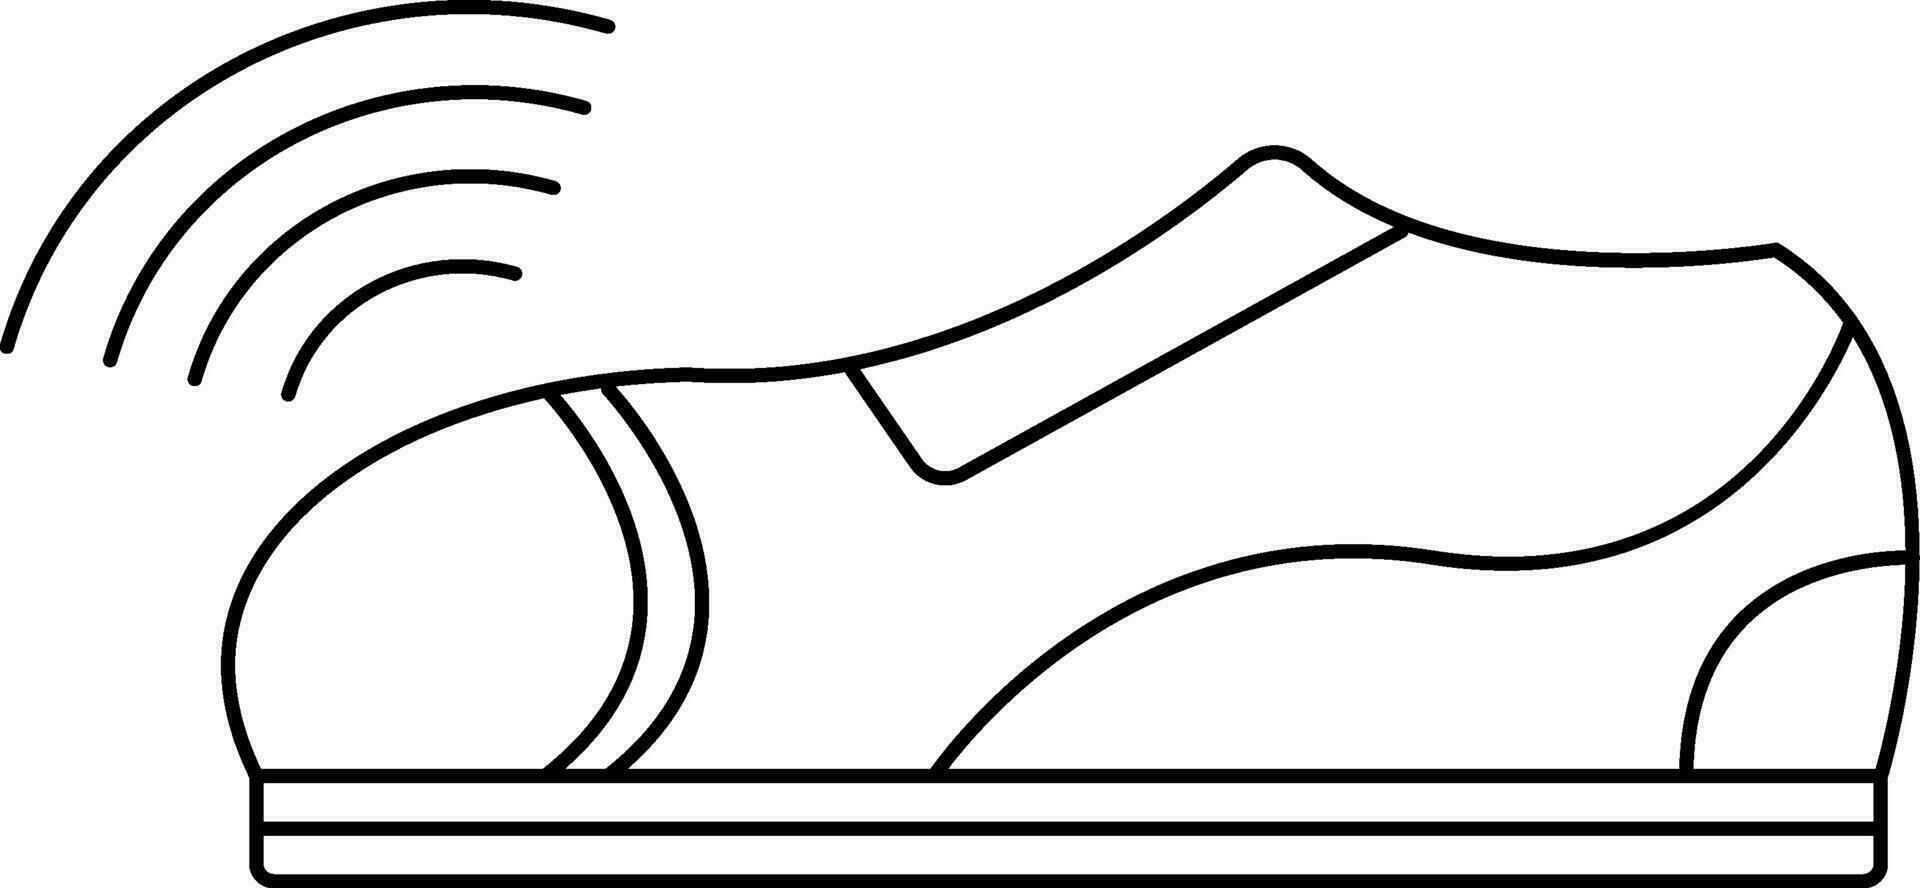 Stylish shoe in line art illustration. vector